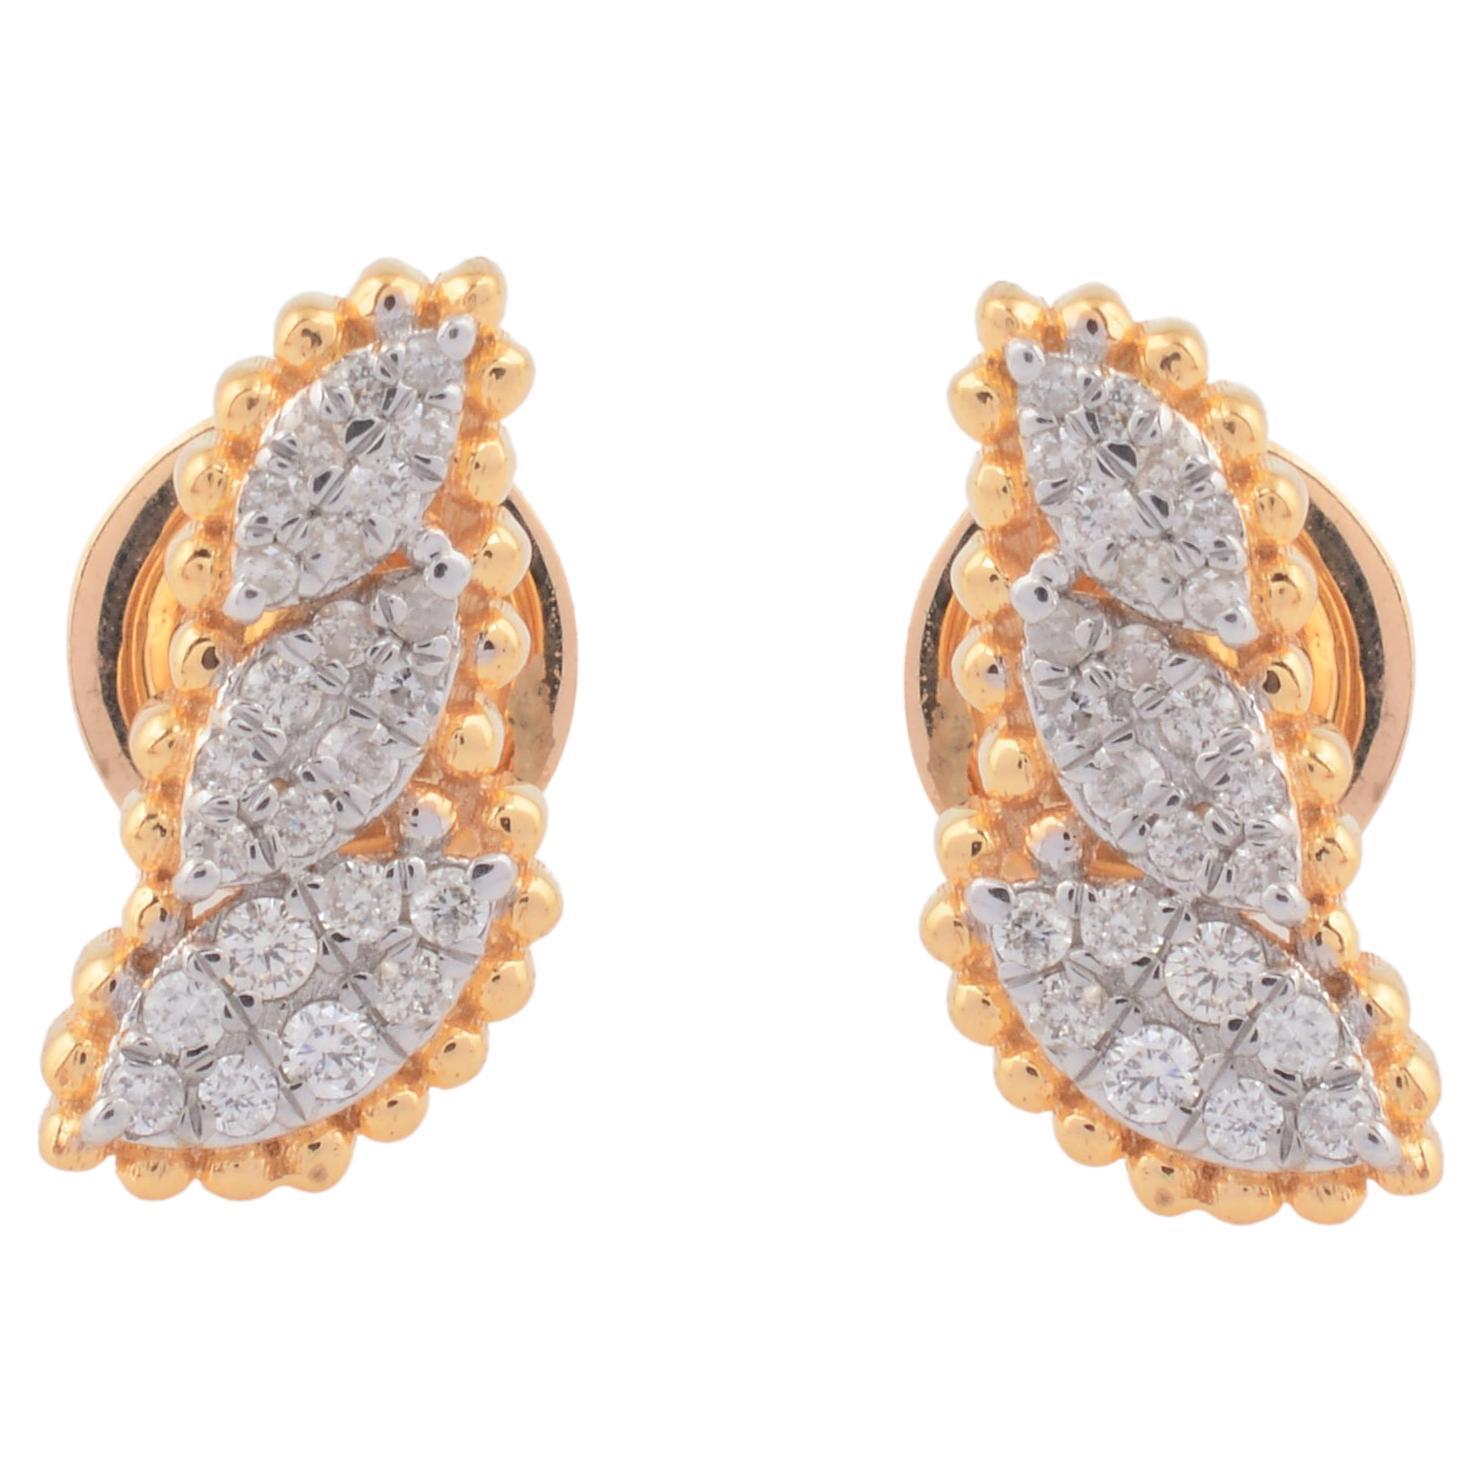 0.2 Carat SI Clarity HI Color Diamond Stud Earrings 18 Karat Yellow Gold Jewelry